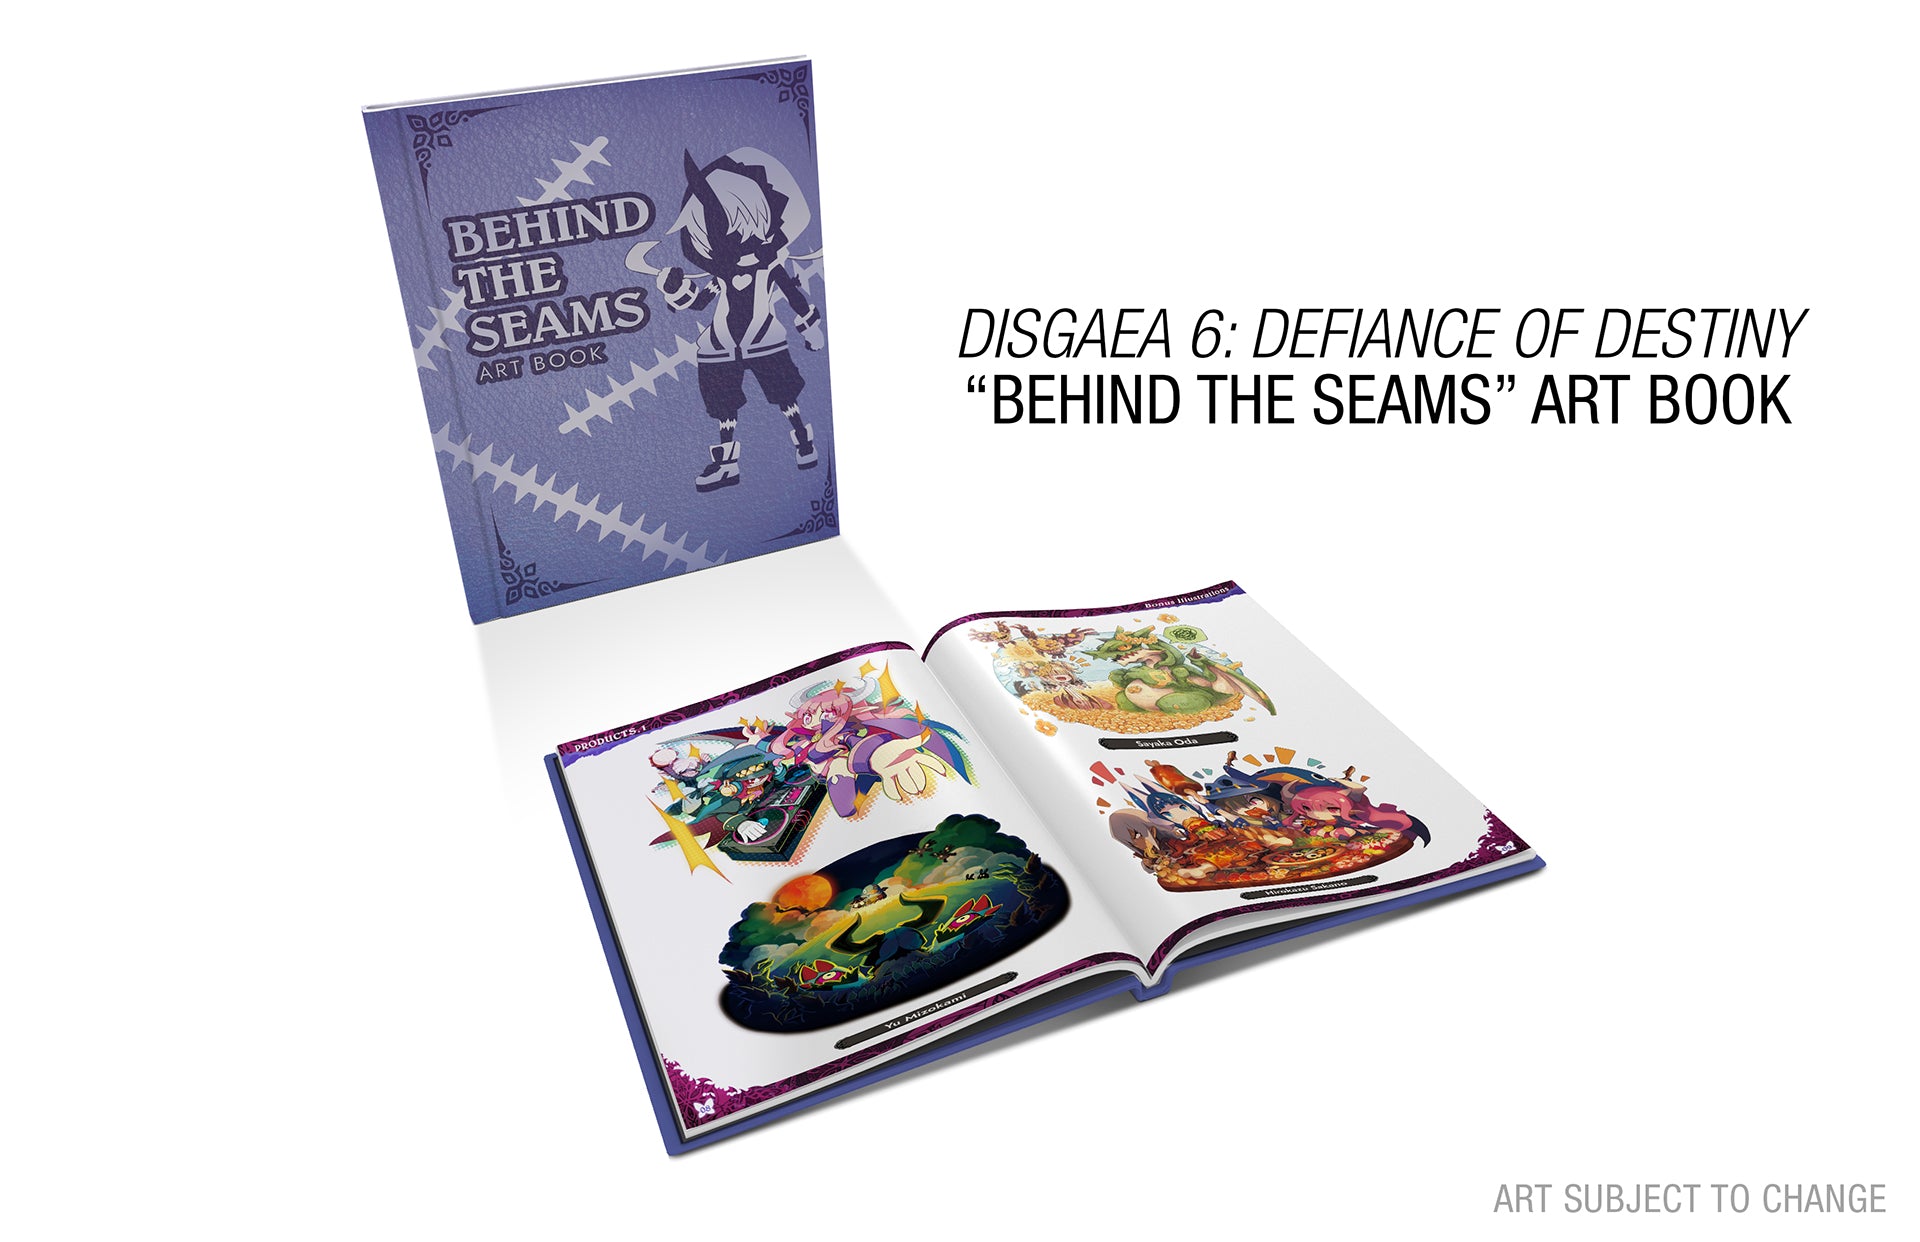 Disgaea 6: Defiance of Destiny - Limited Edition - Nintendo Switch™